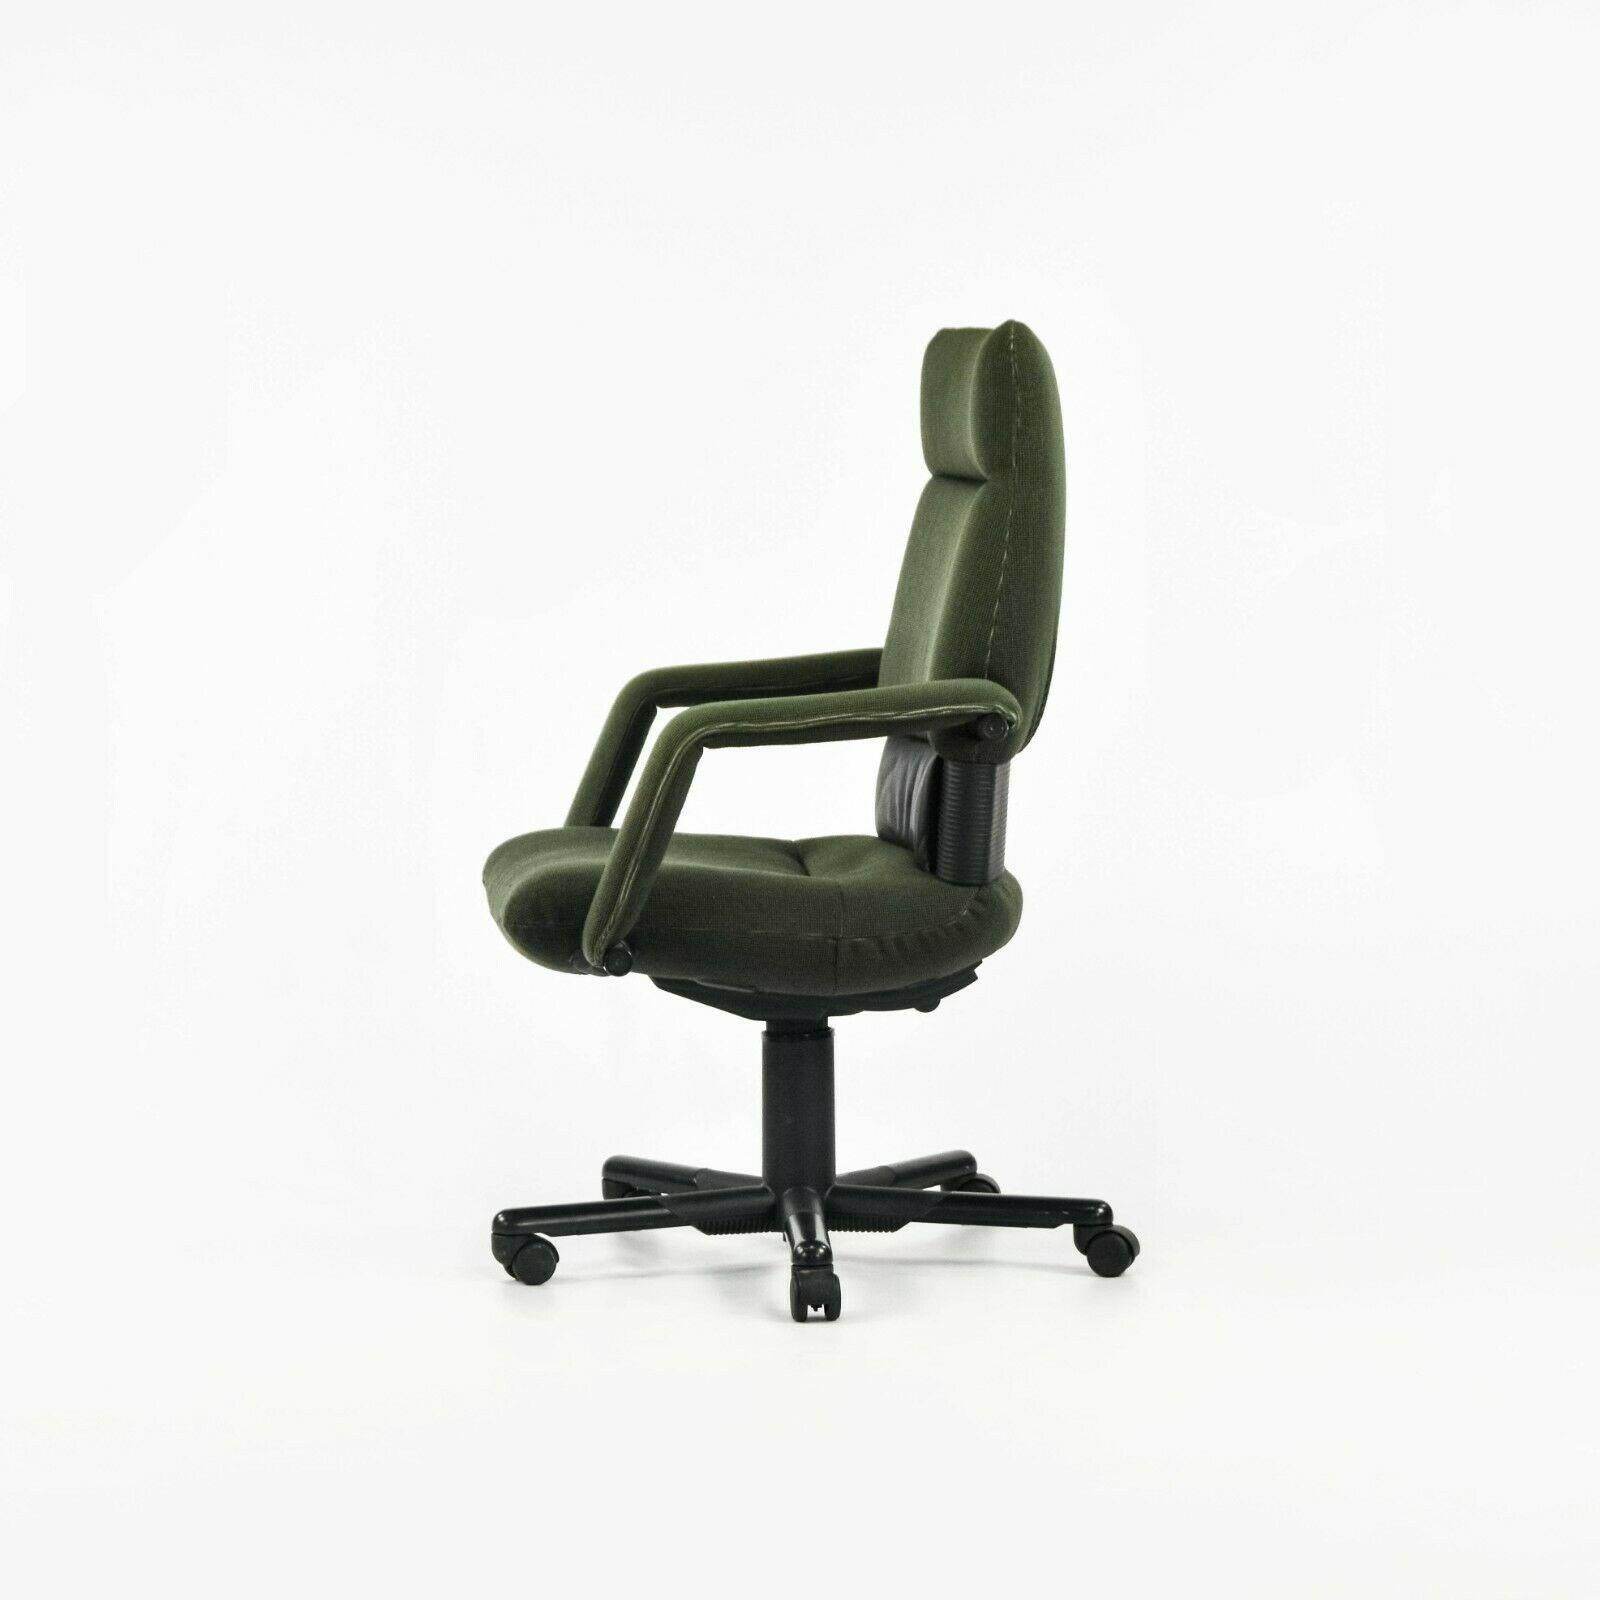 1997 Mario Bellini Vitra Figura Post Modern High Back Desk Chair in Green Fabric For Sale 1